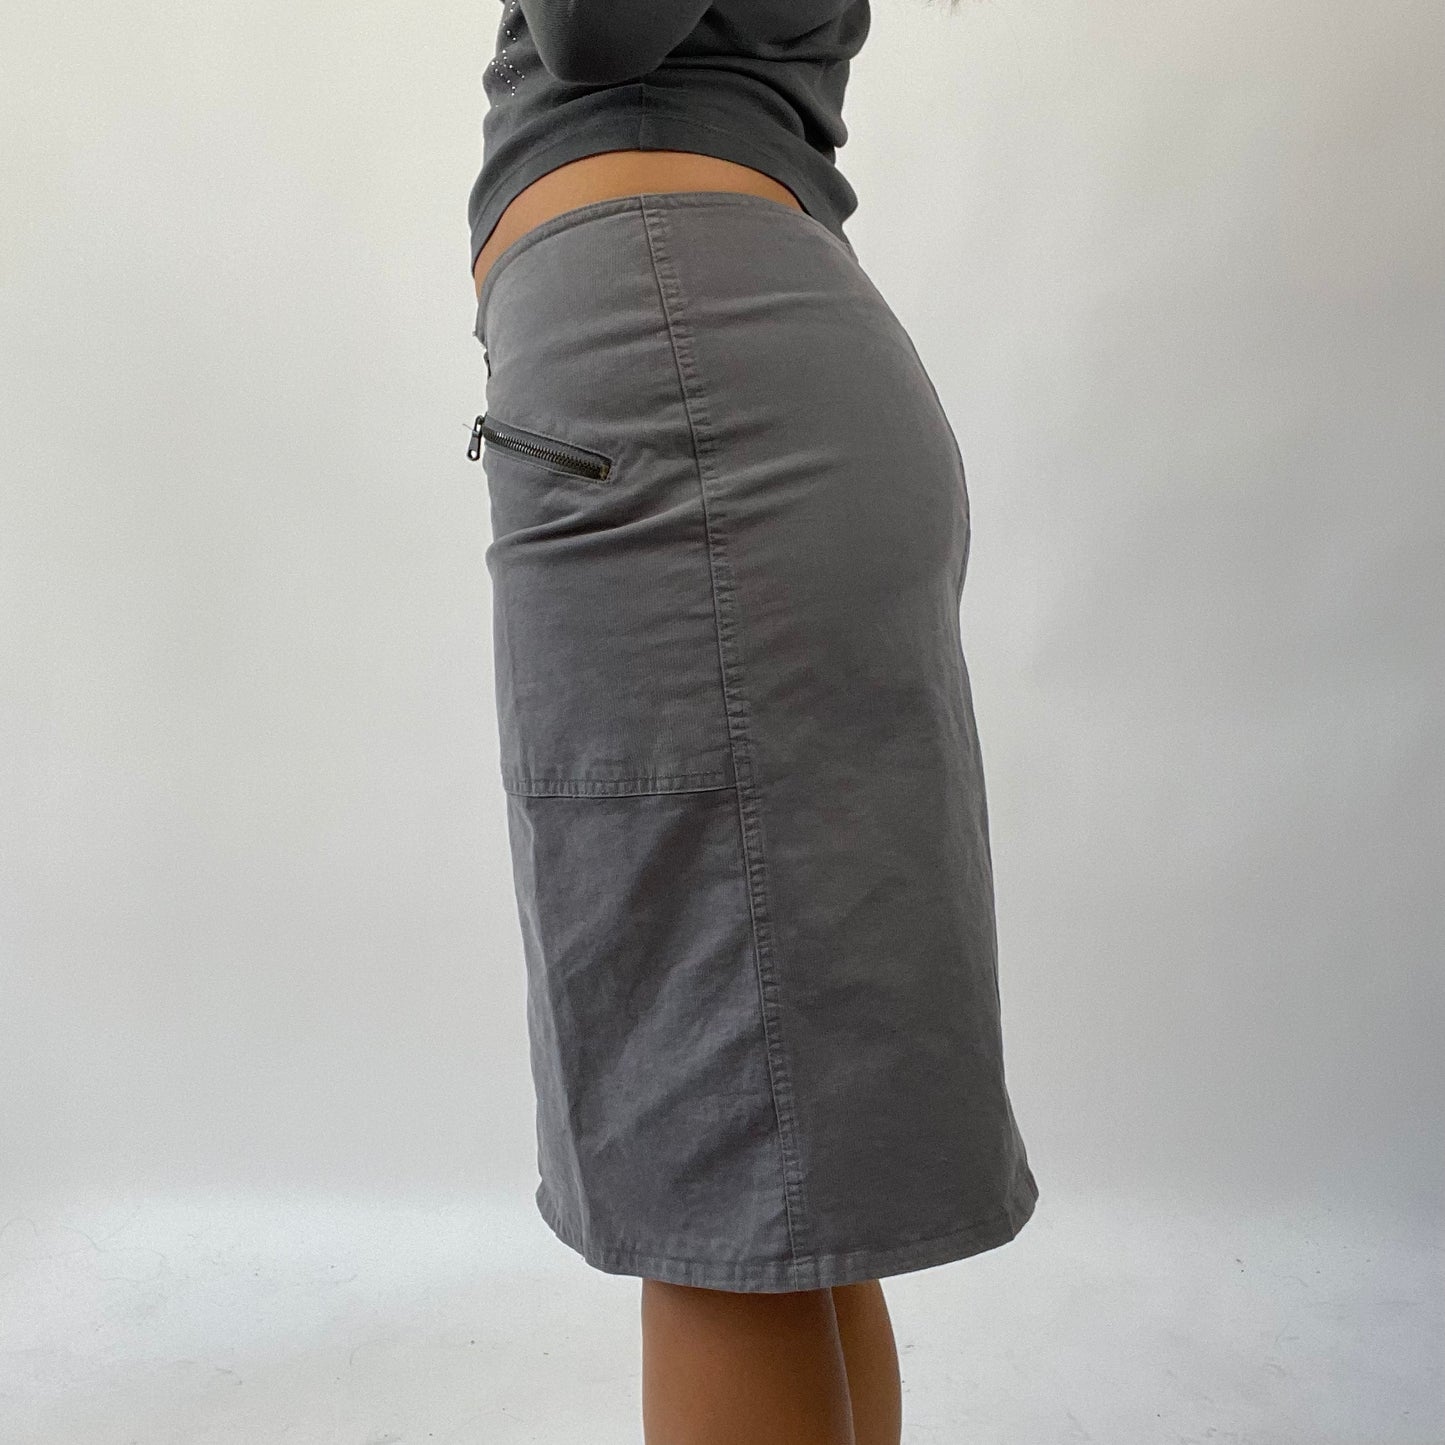 MISS REMASS DROP | small grey corduroy midi skirt with zip details